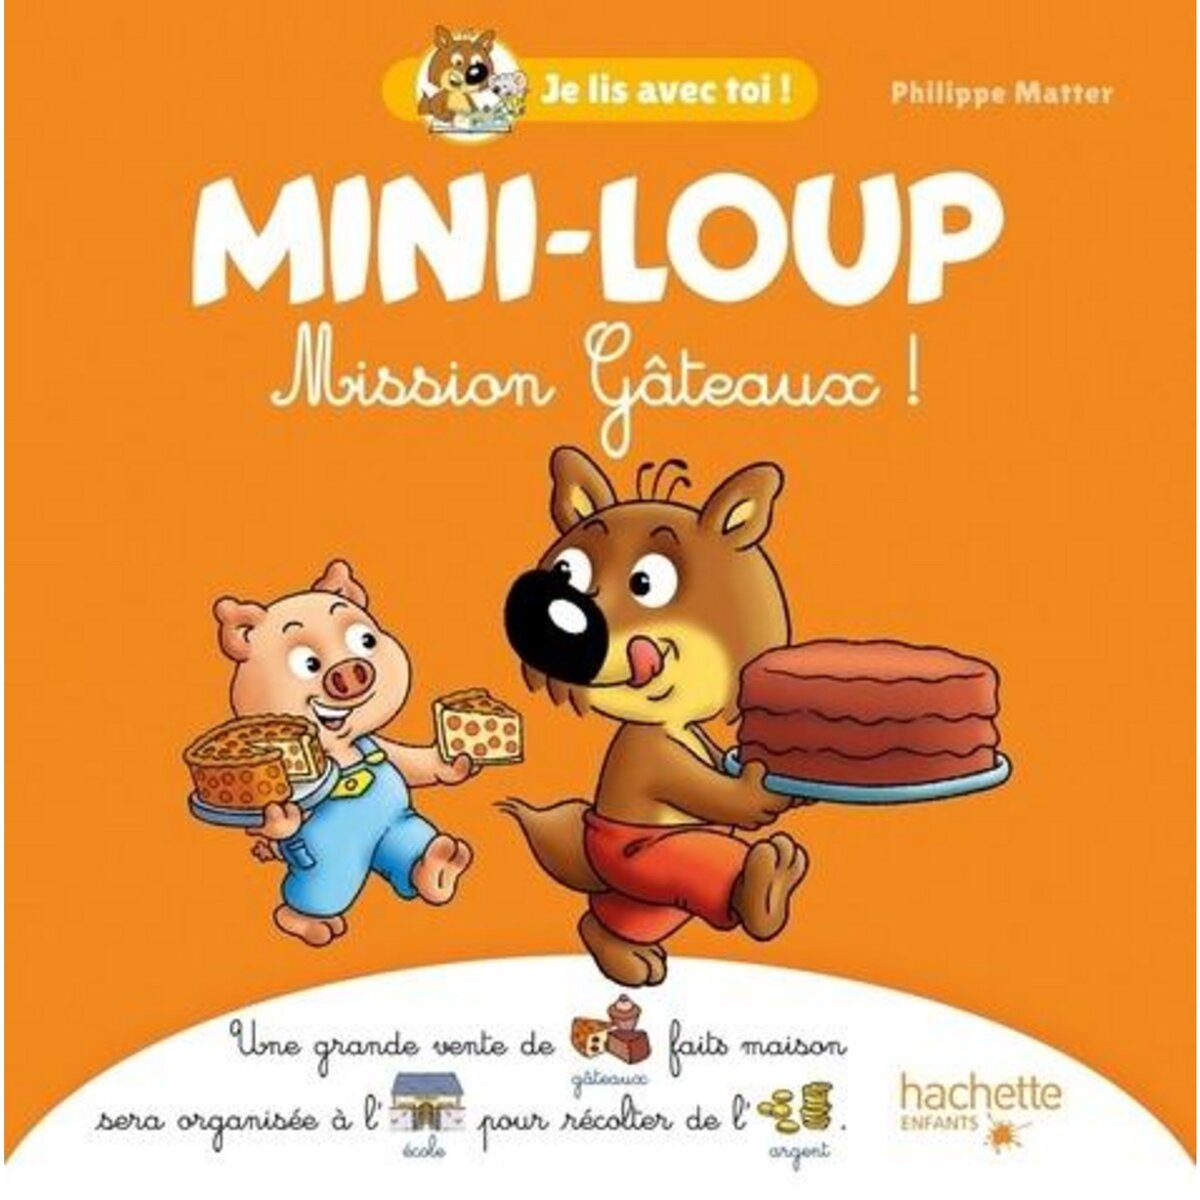  MINI-LOUP : MISSION GATEAUX !, Matter Philippe